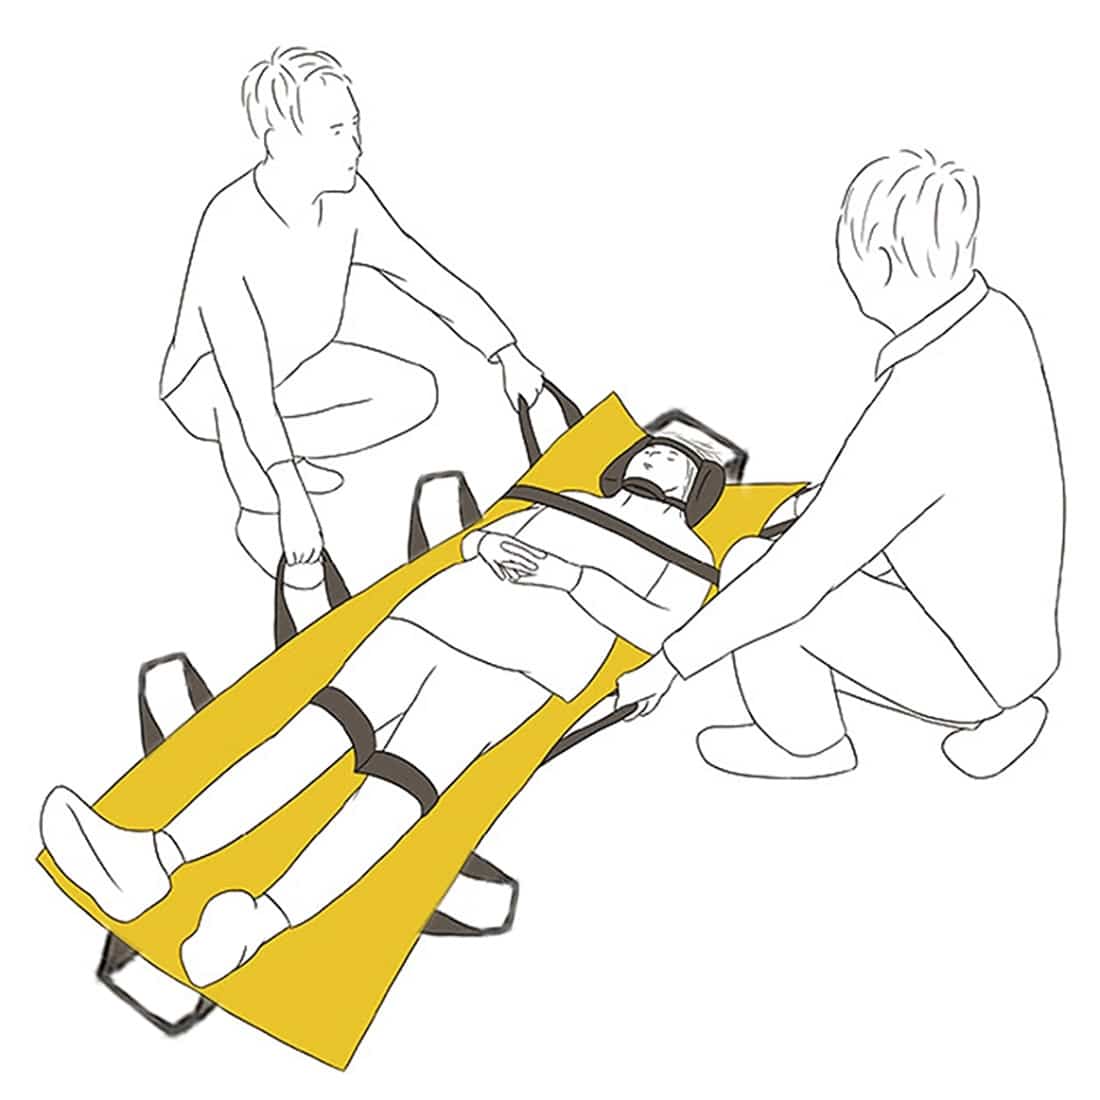 soft stretcher, lightweight stretcher, evacuation sheet